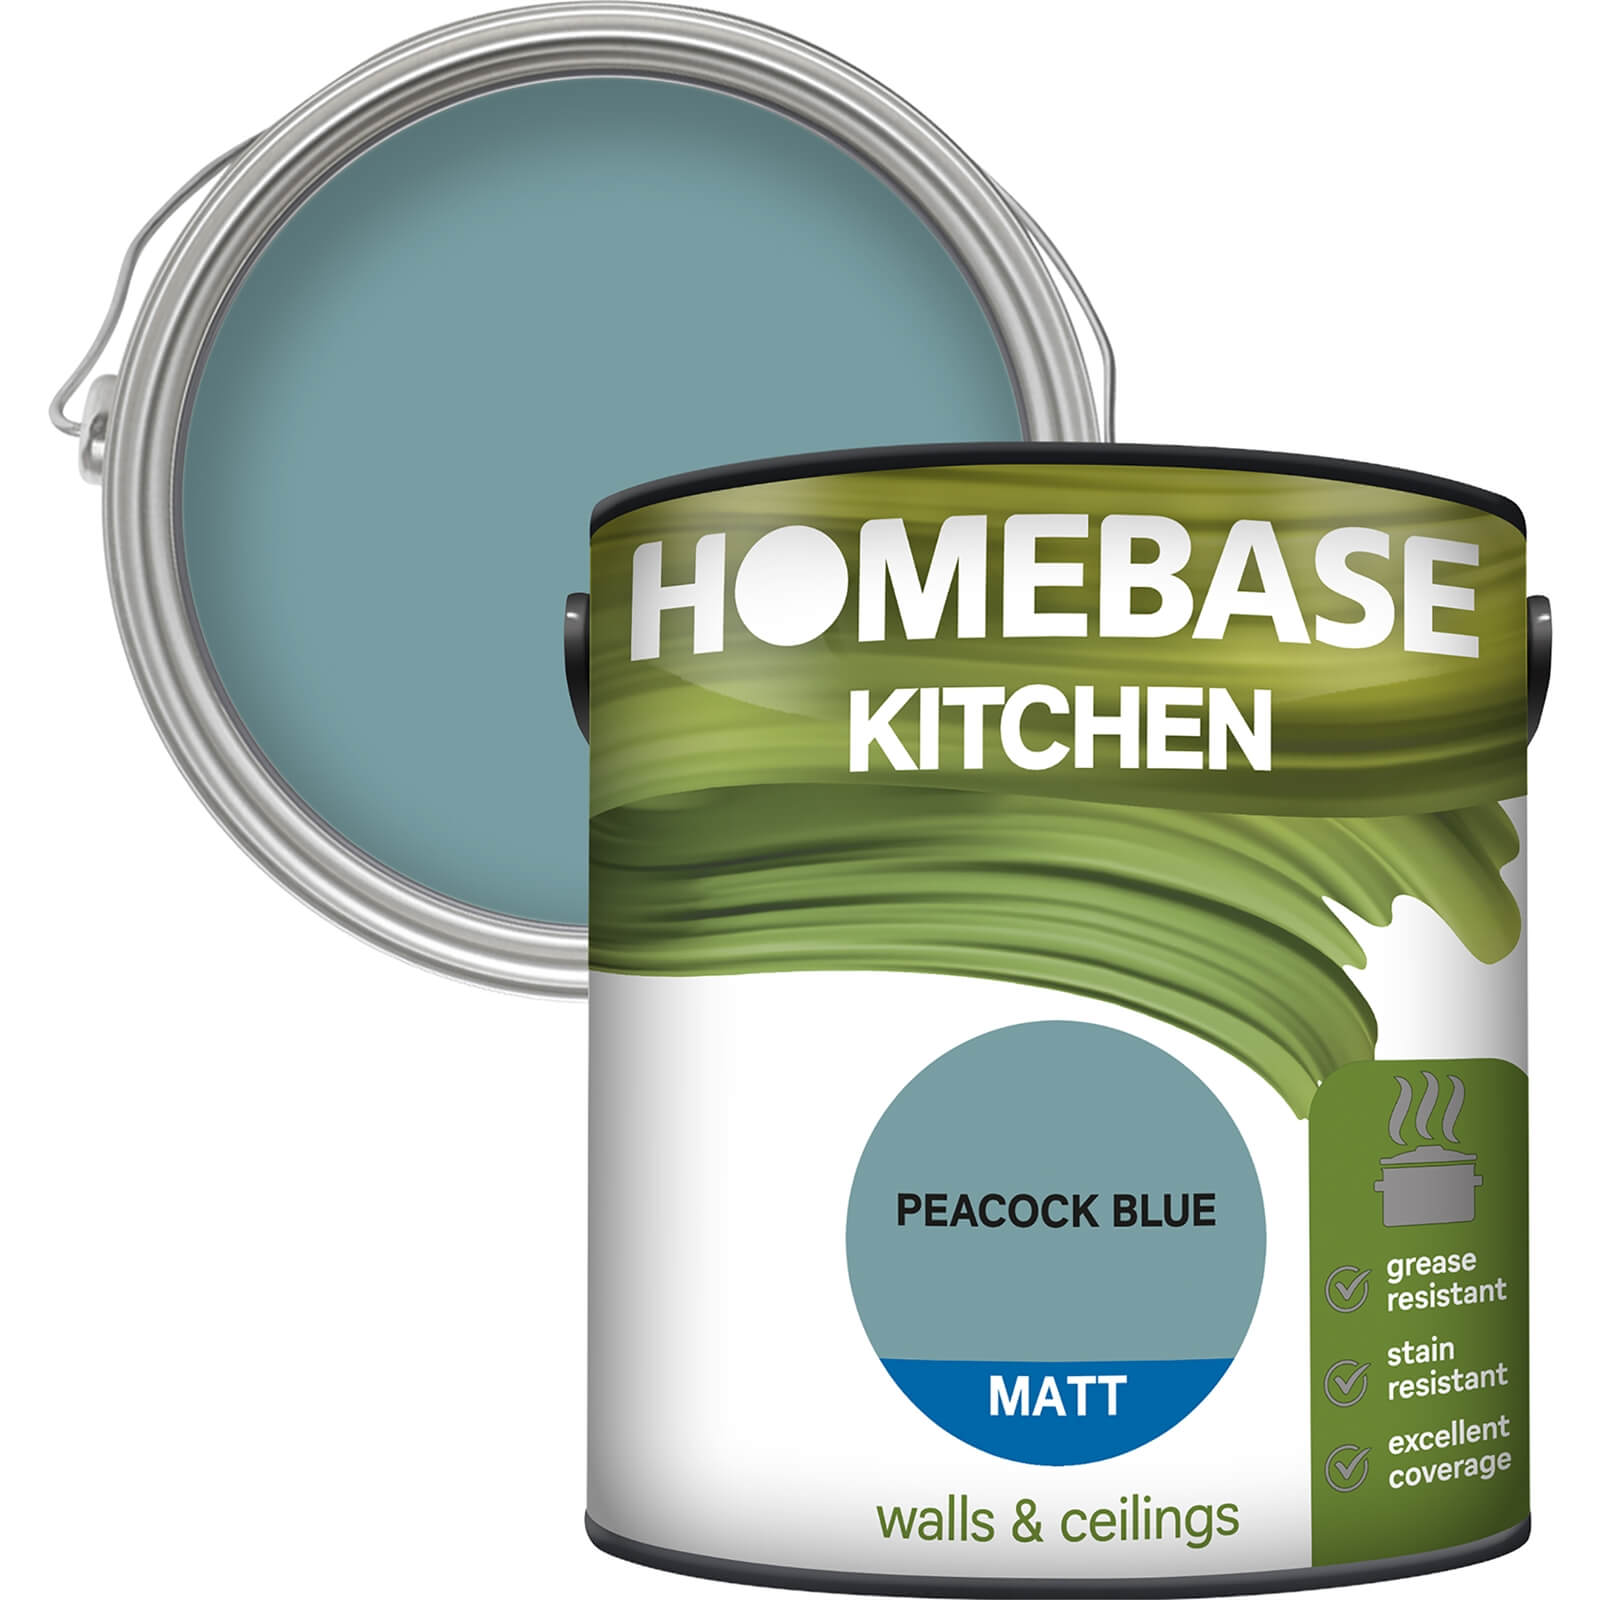 Homebase Kitchen Matt Paint - Peacock Blue 2.5L